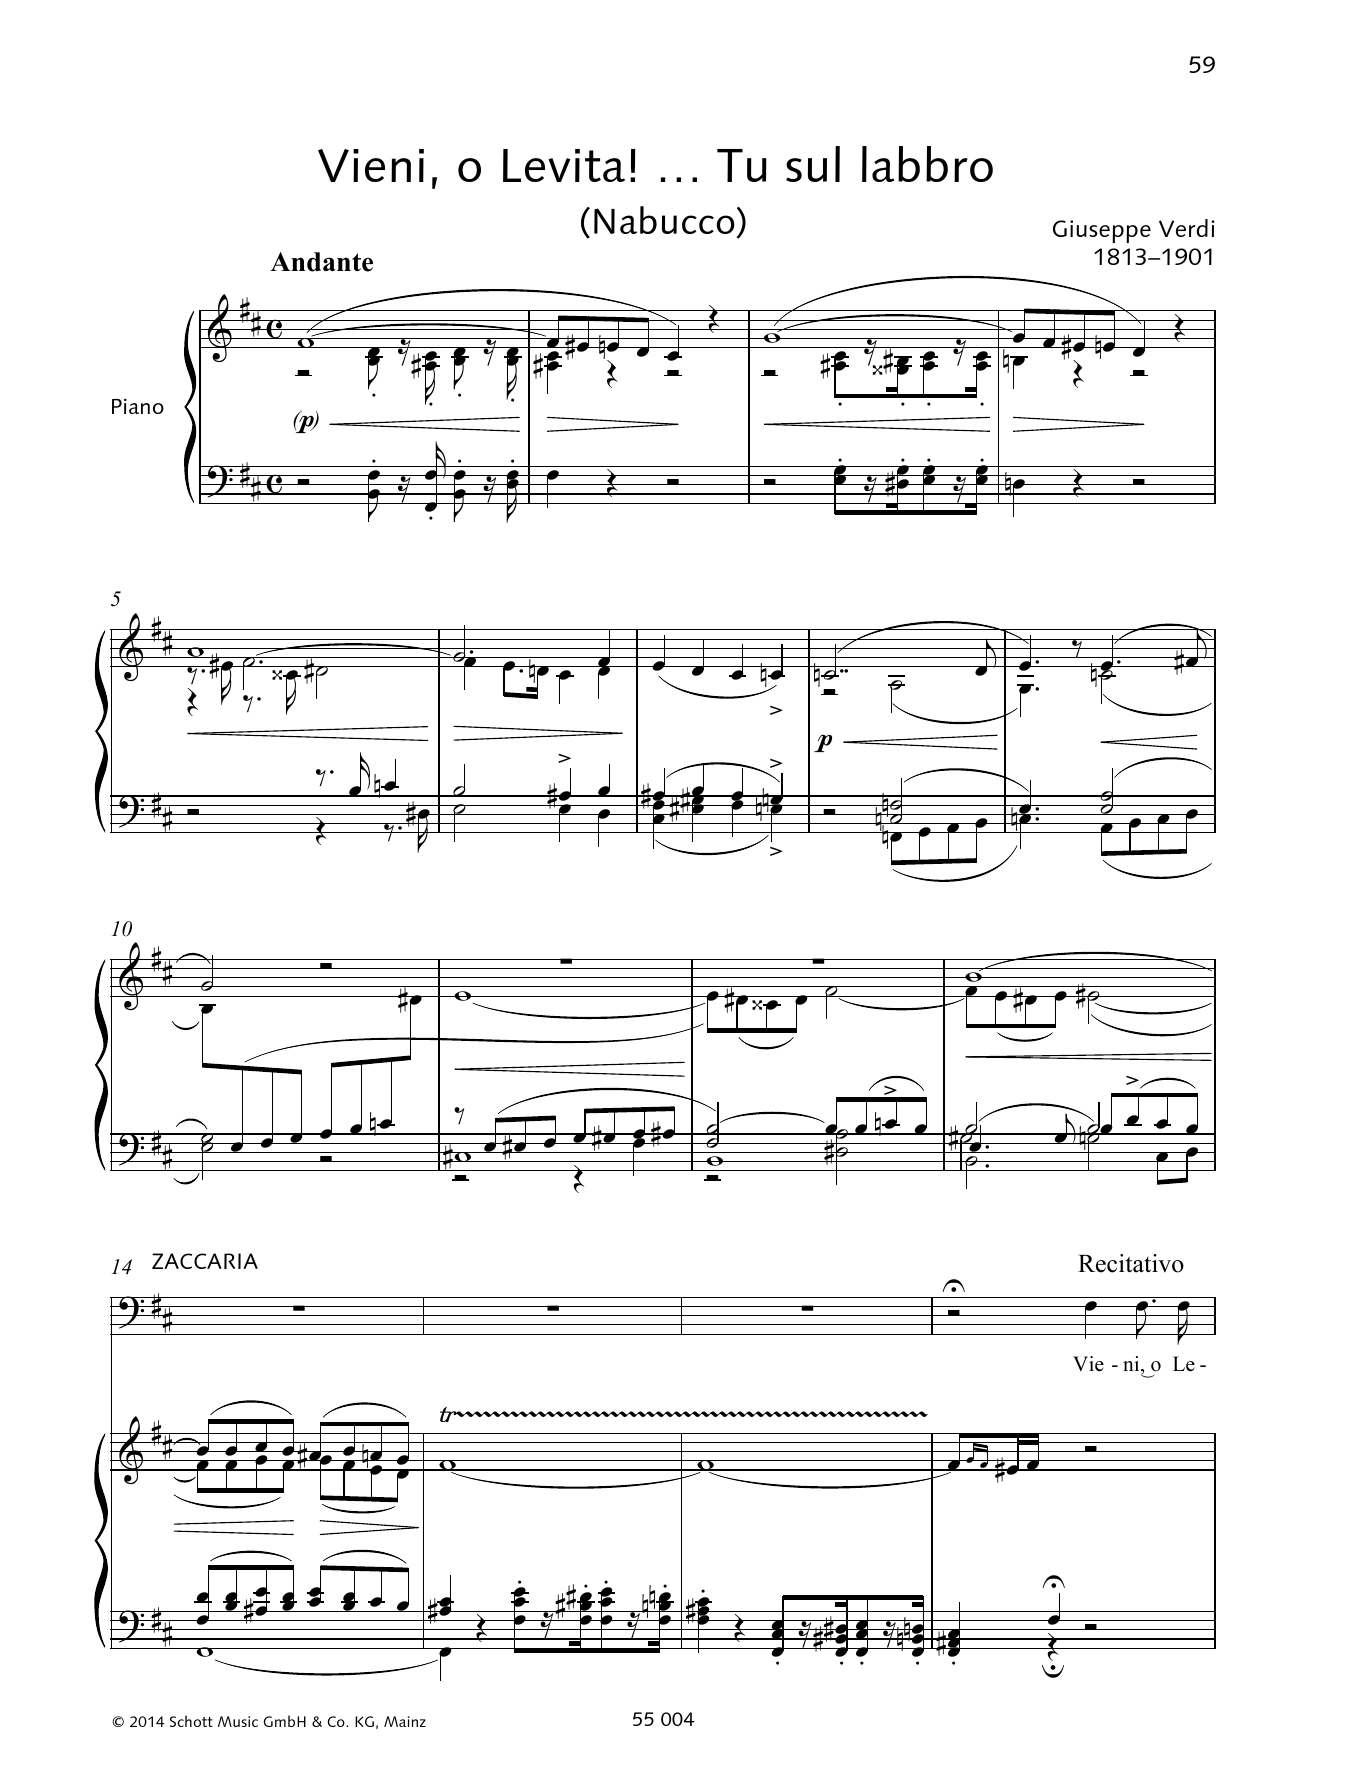 Giuseppe Verdi Vieni, o Levita!... Tu sul labbro Sheet Music Notes & Chords for Piano & Vocal - Download or Print PDF